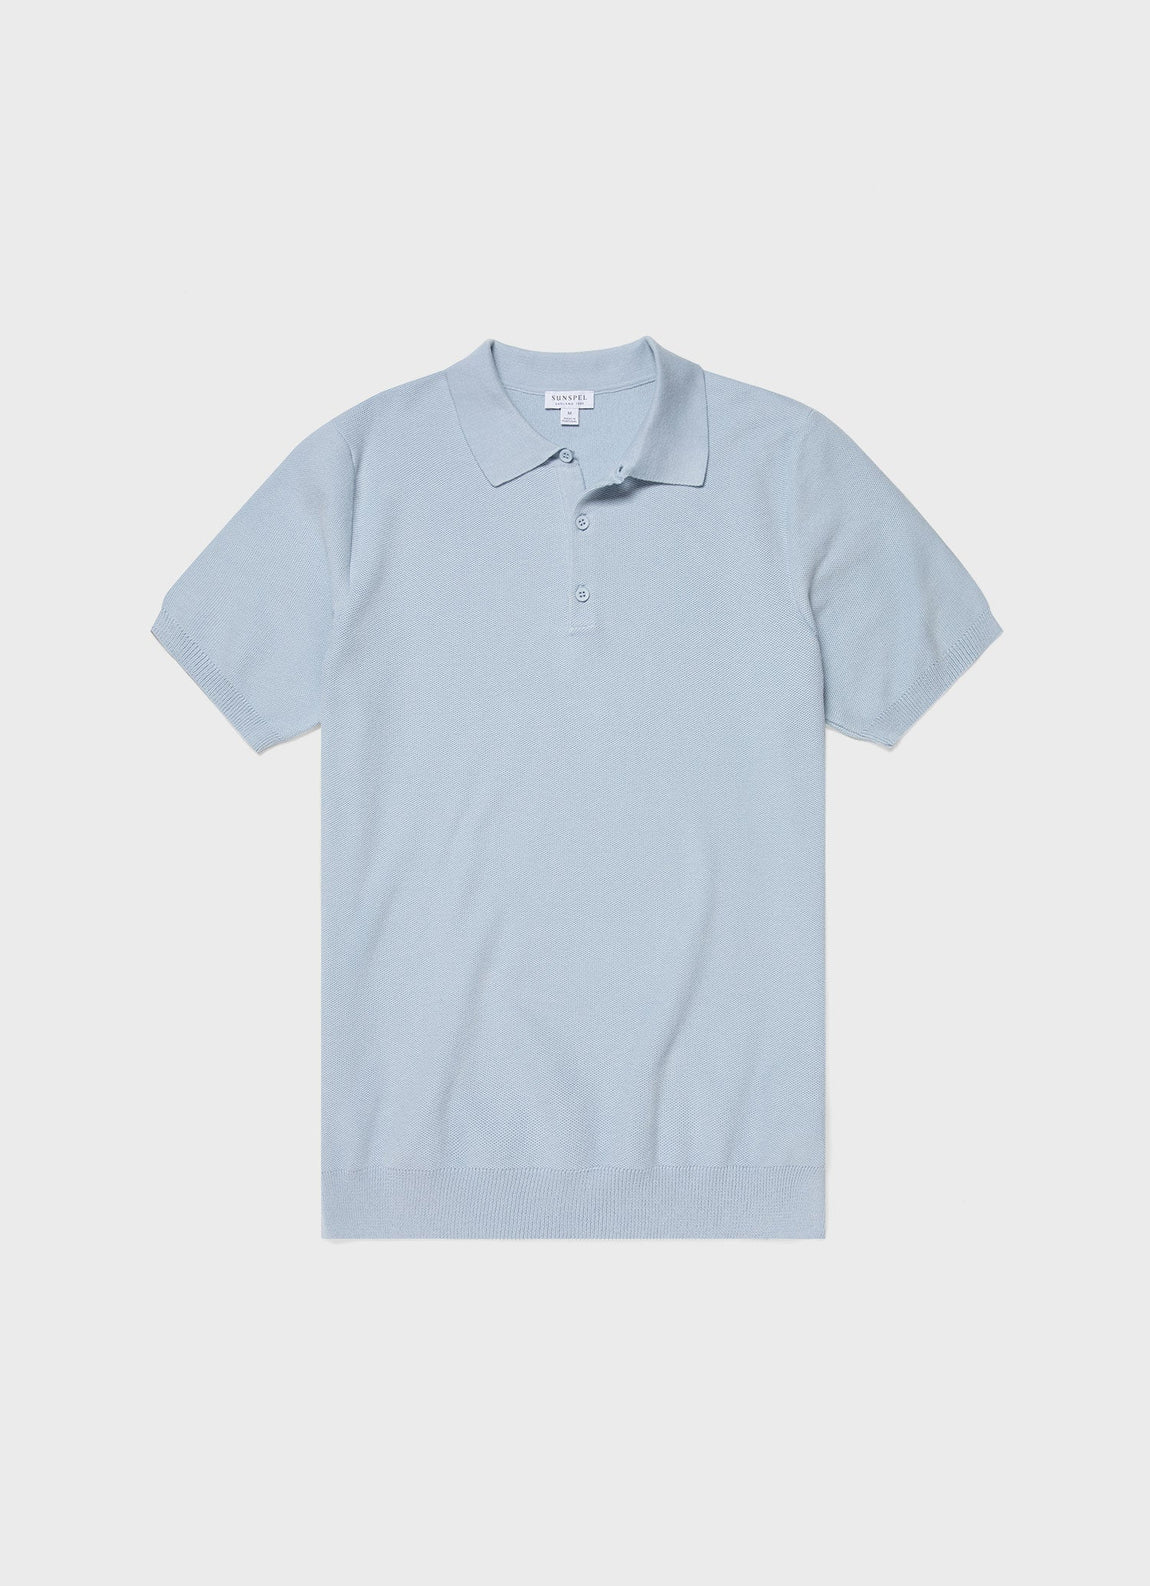 Men's Knit Polo Shirt in Pastel Blue